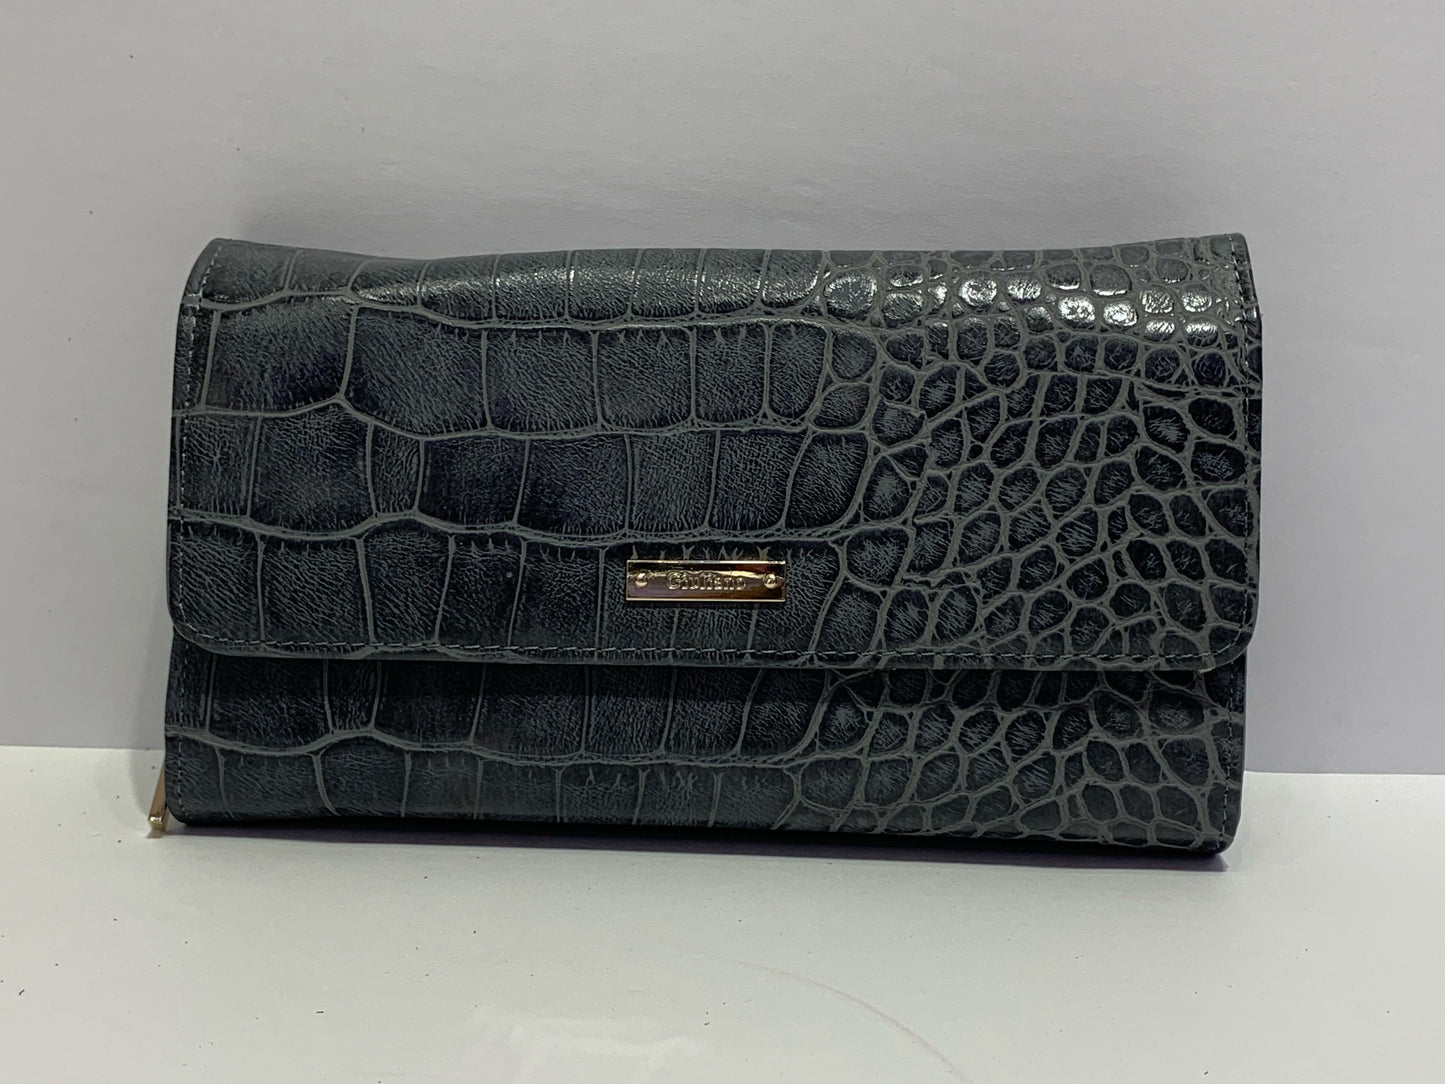 Crocodile Textured Italian Leather Purse Wallet